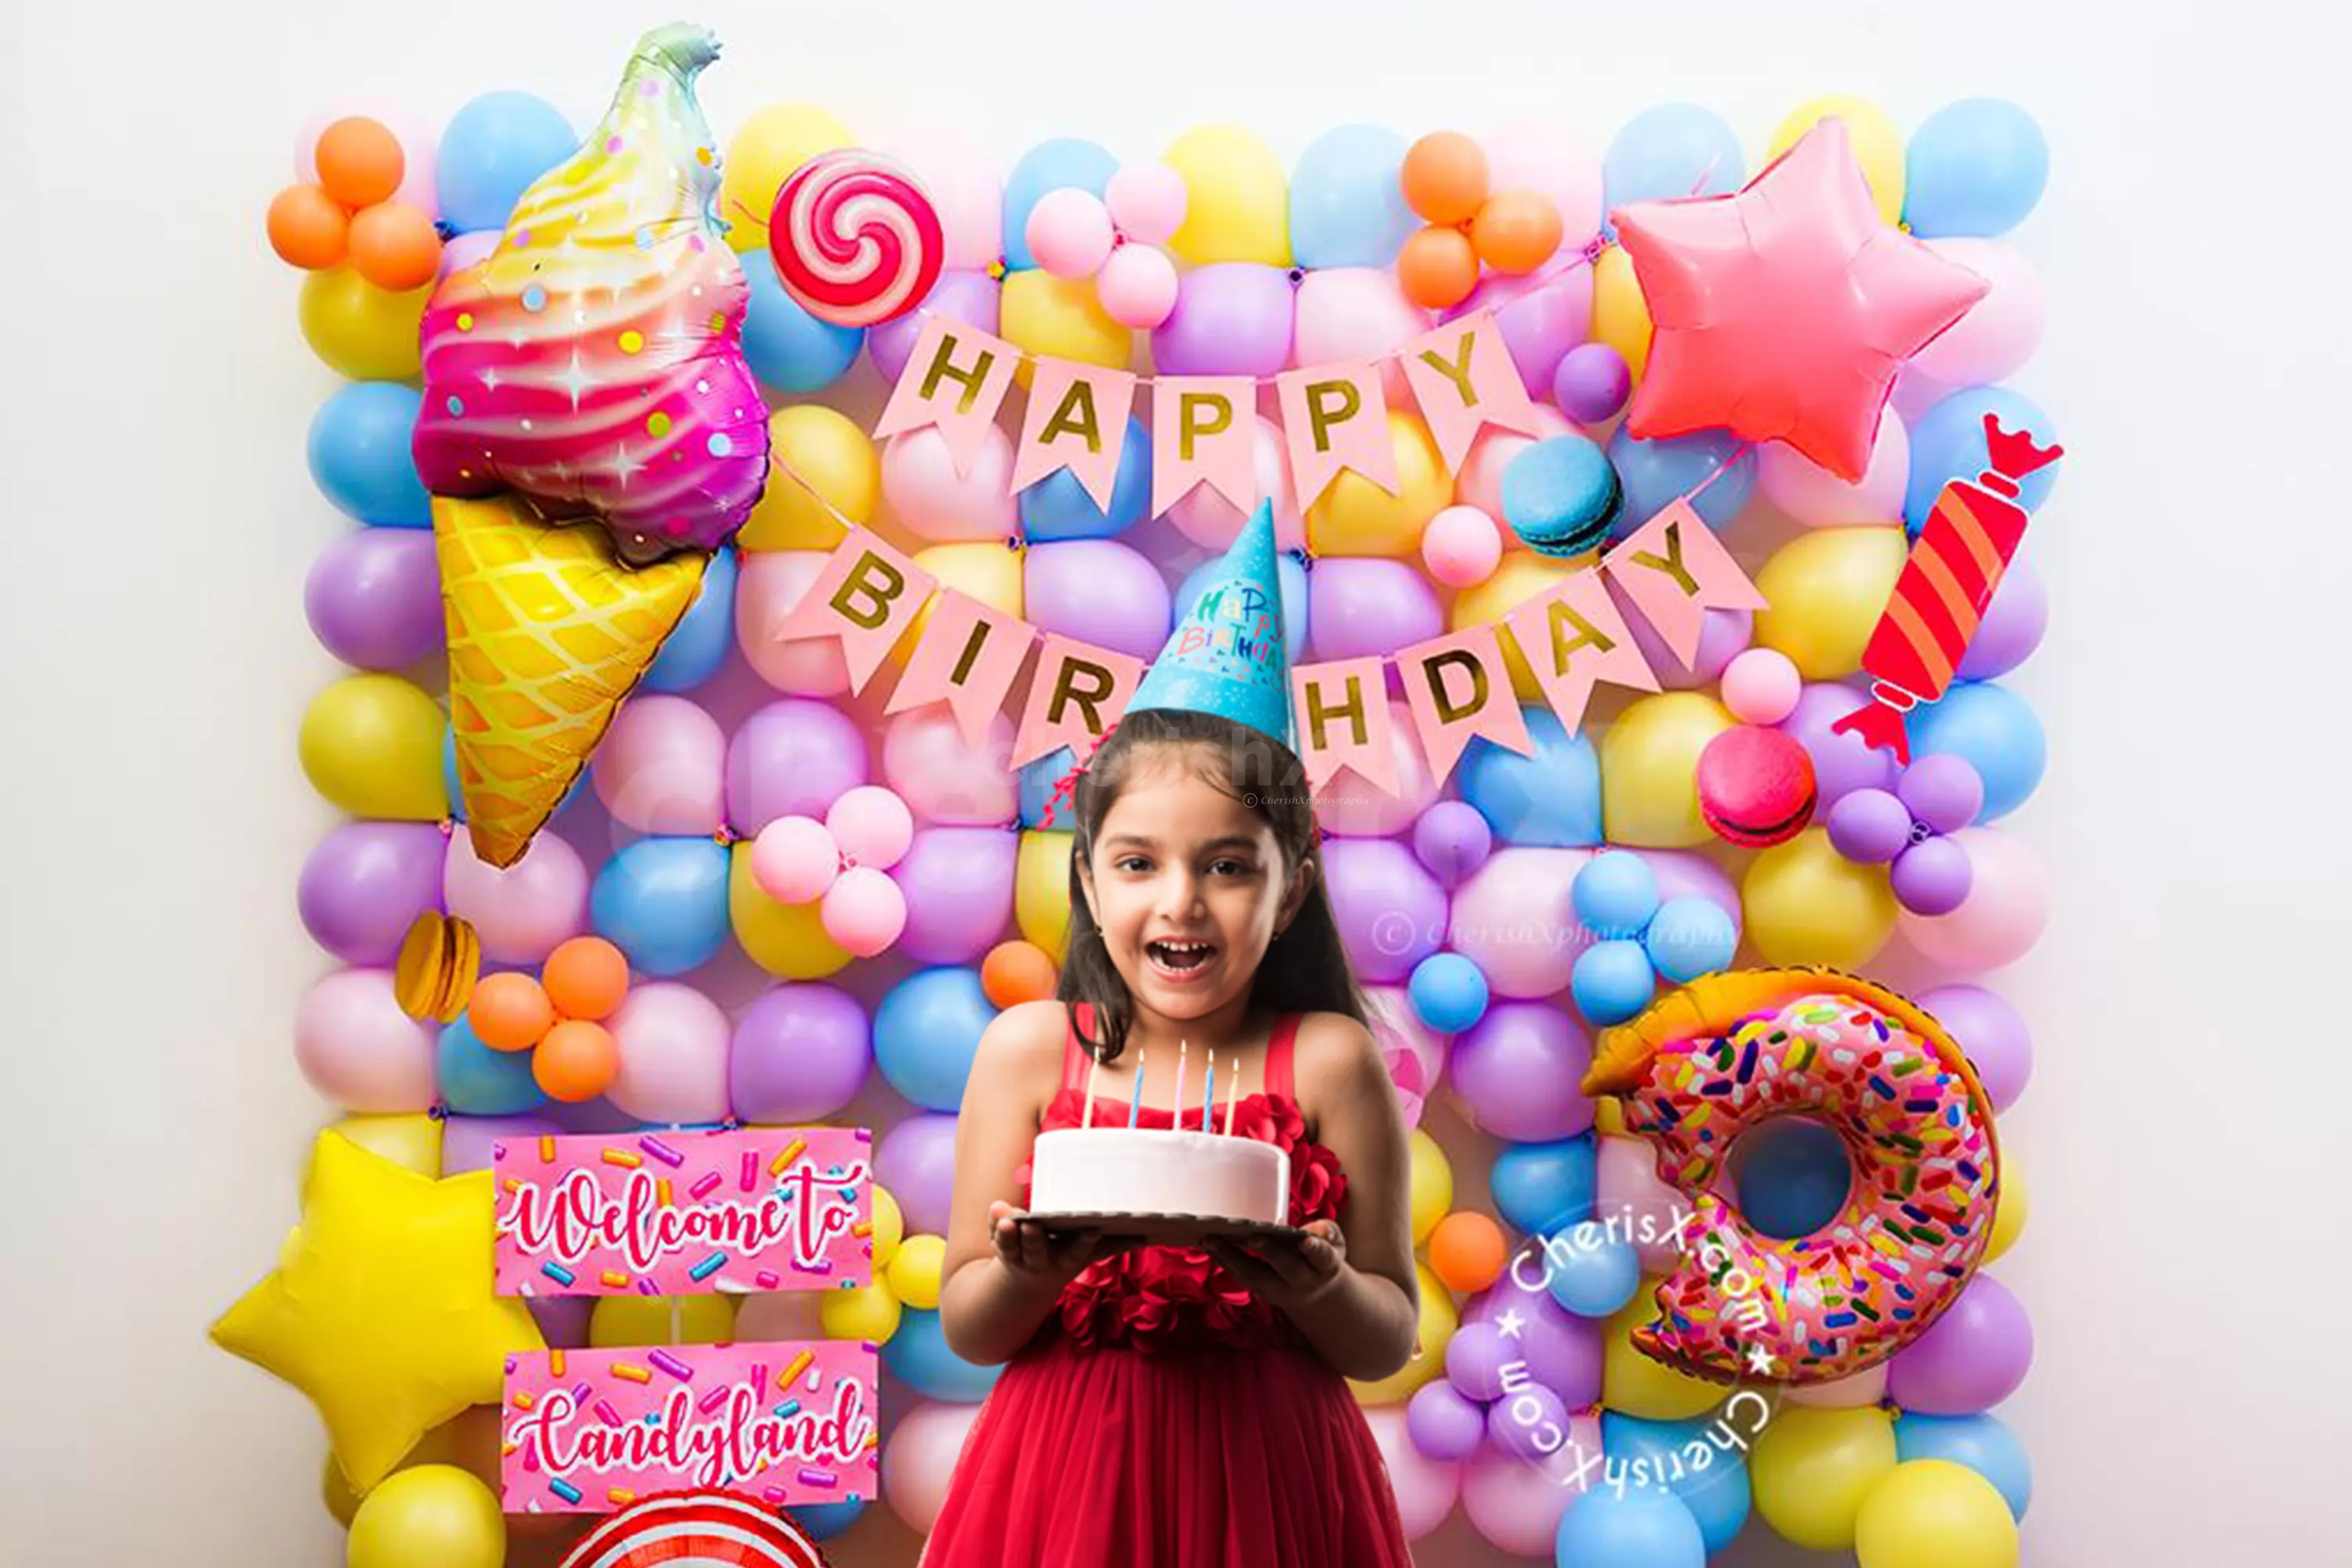 Buy CherishX Birthday Decoration Items Kit - Combo Online at Best